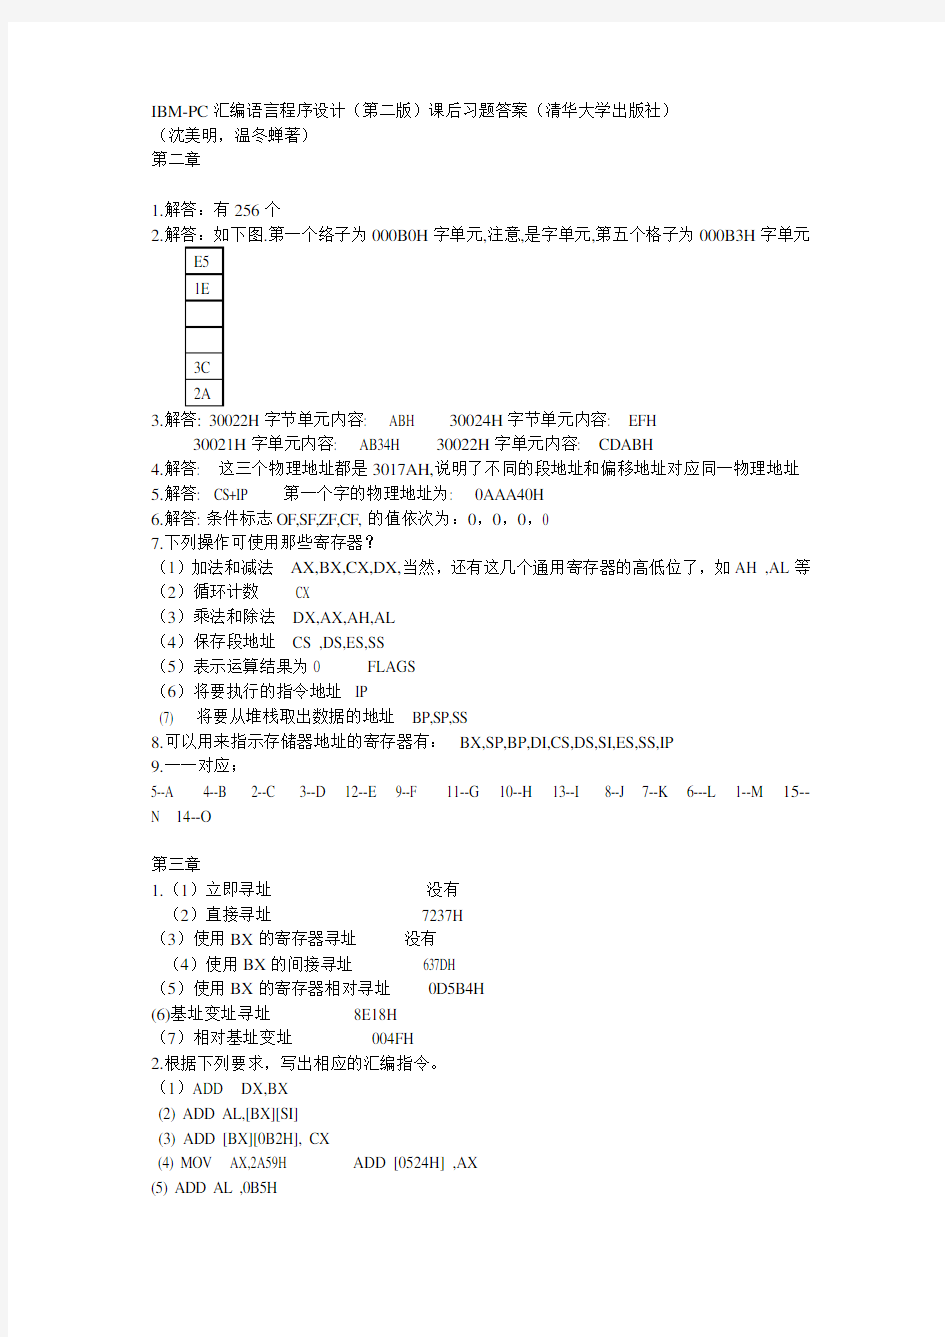 IBM-PC汇编语言程序设计(第二版)课后习题答案(清华大学出版社)解析